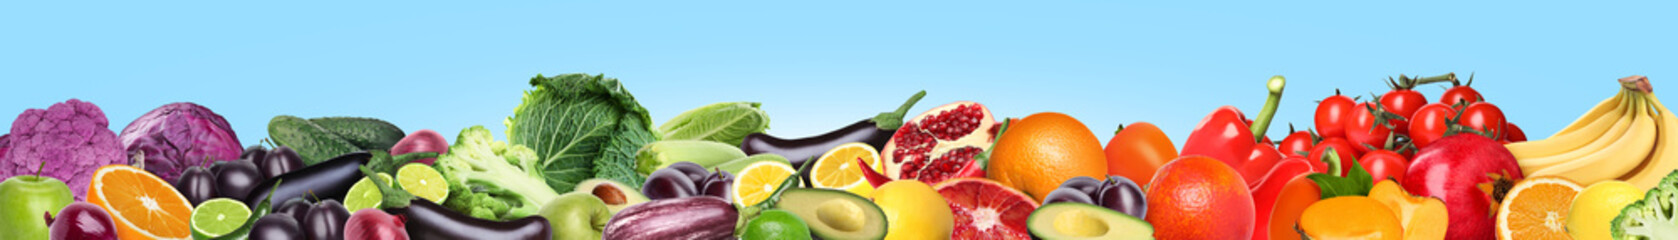 Many different fresh fruits and vegetables on light blue background. Banner design